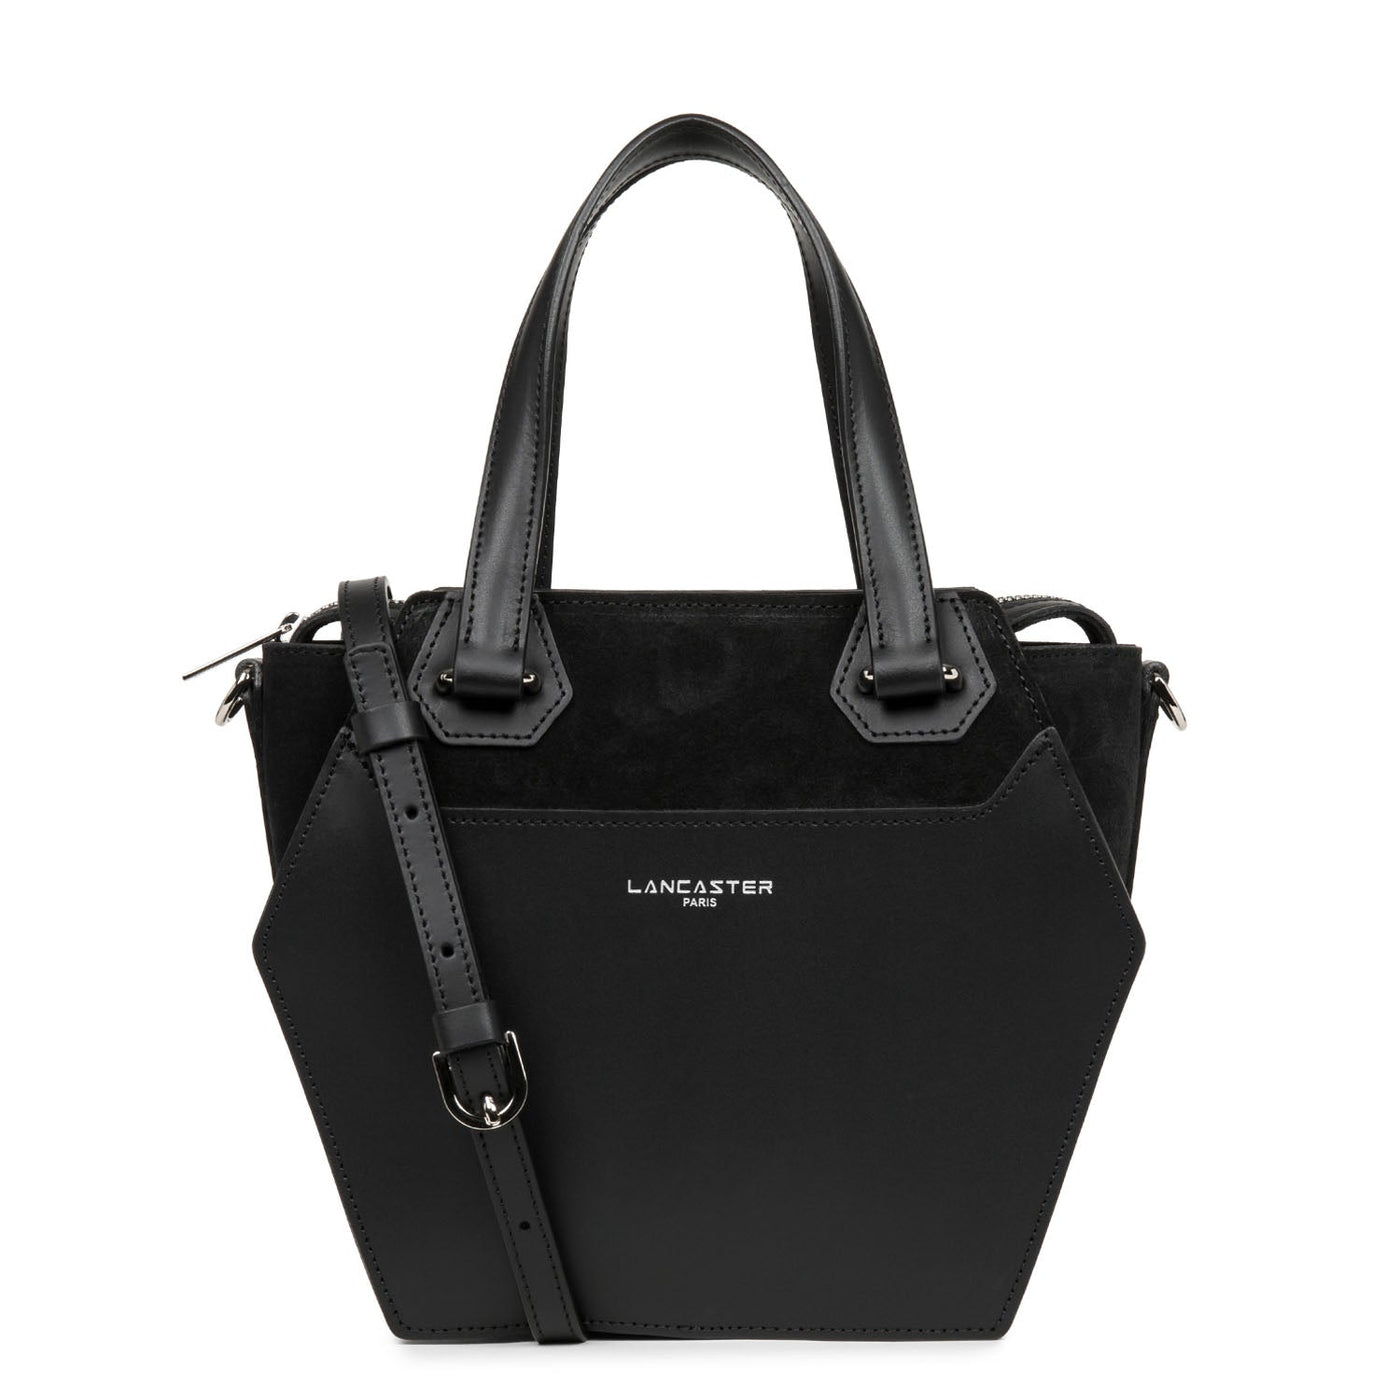 m handbag - smooth ruche #couleur_noir